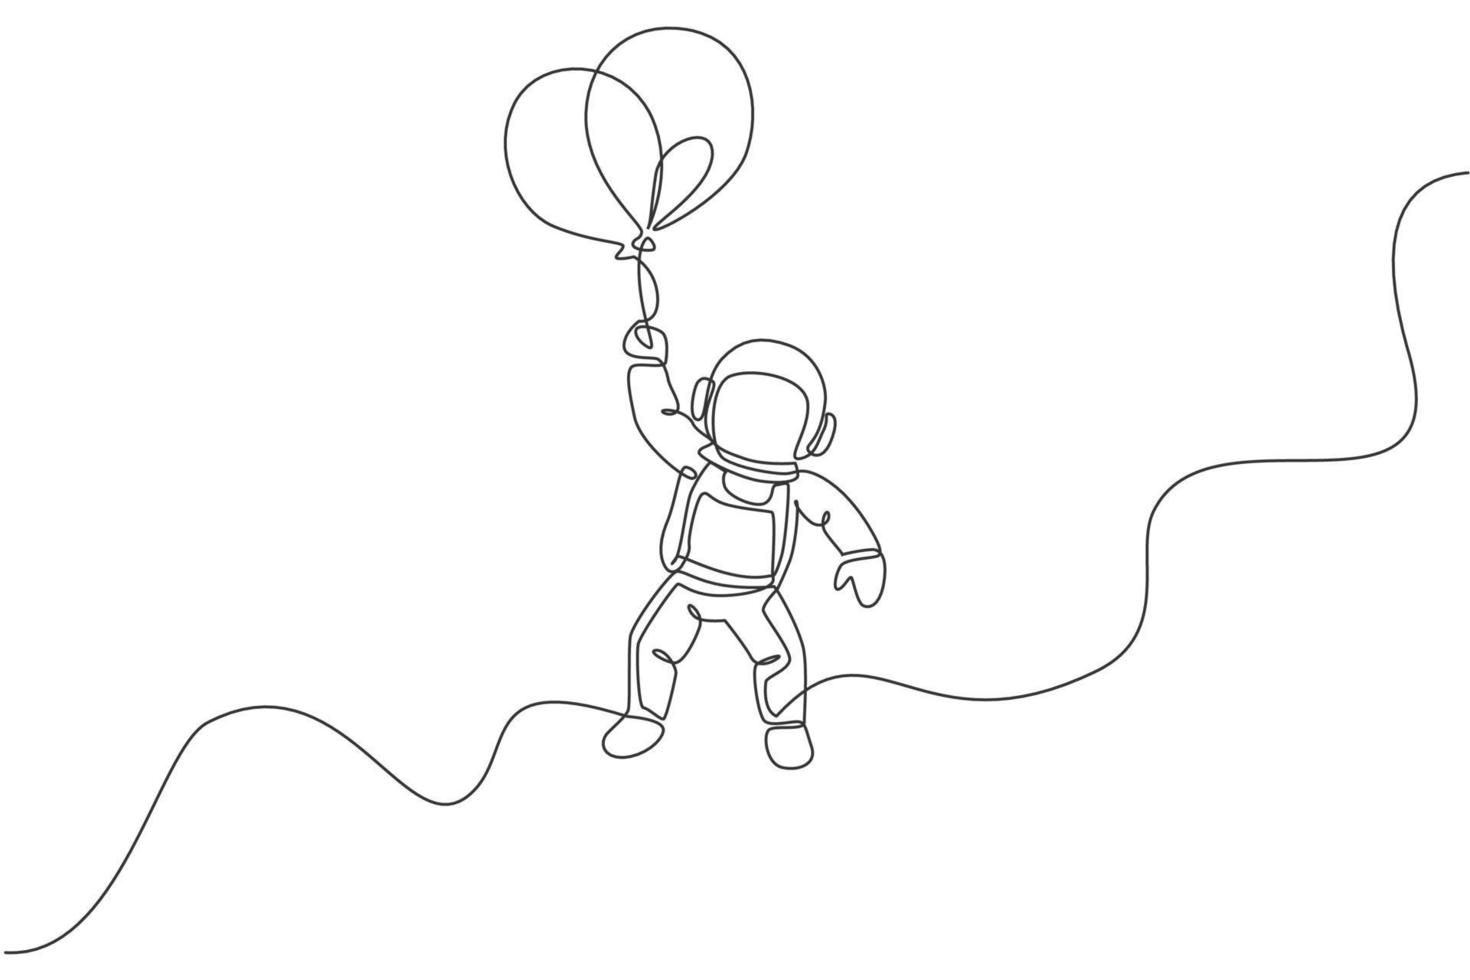 en kontinuerlig linjeteckning av kosmonaut som utforskar yttre rymden. astronaut som flyger med ballonger. fantasi kosmisk galax upptäckt koncept. dynamisk enkel linje rita grafisk design vektor illustration